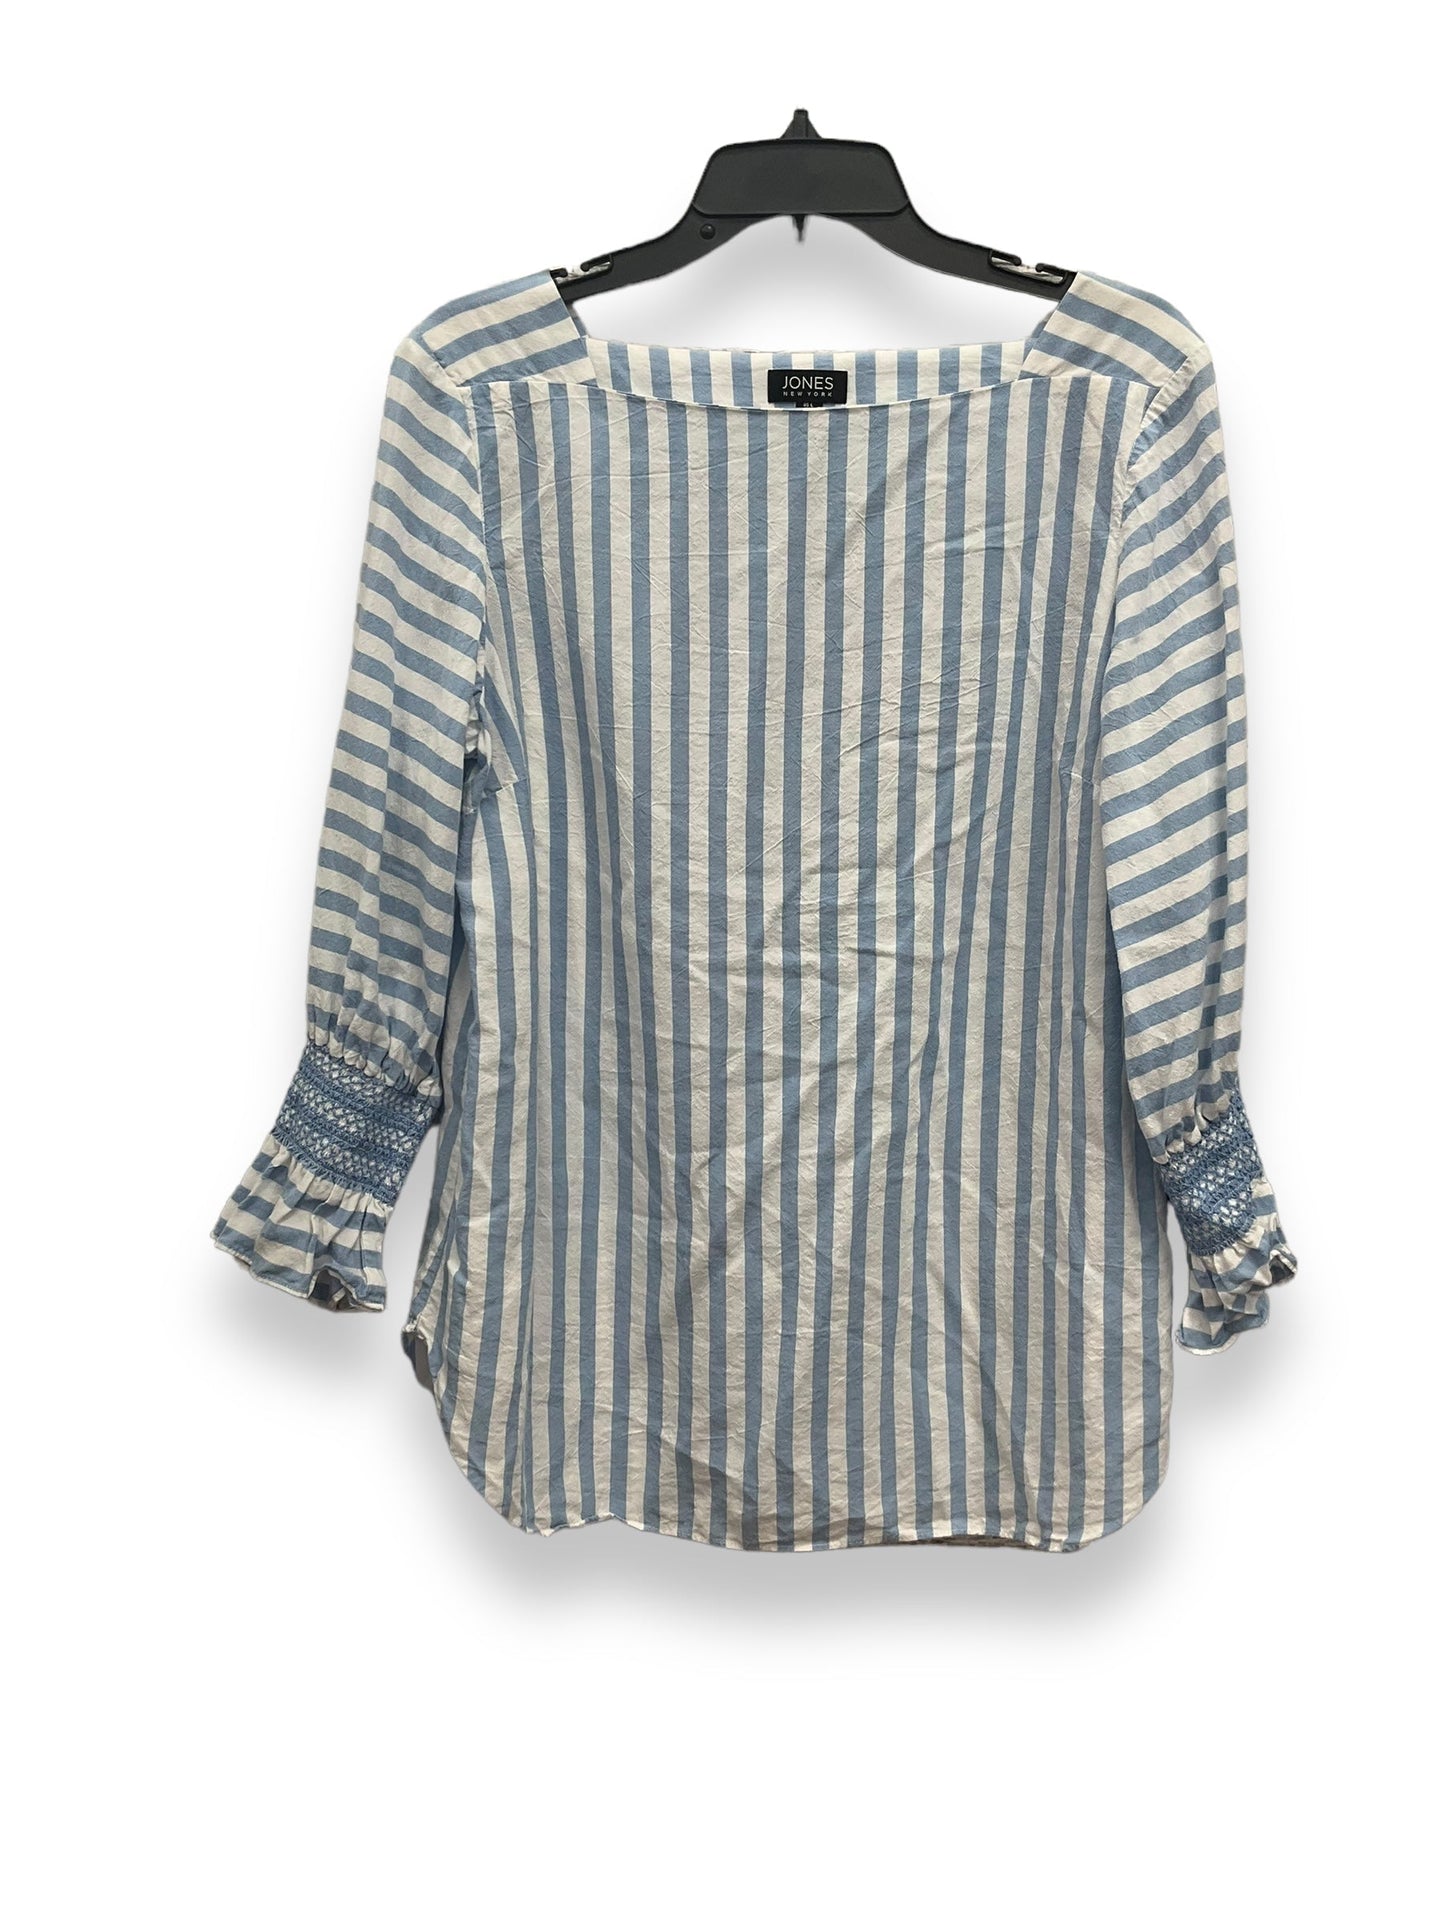 Striped Pattern Top Short Sleeve Jones New York, Size L